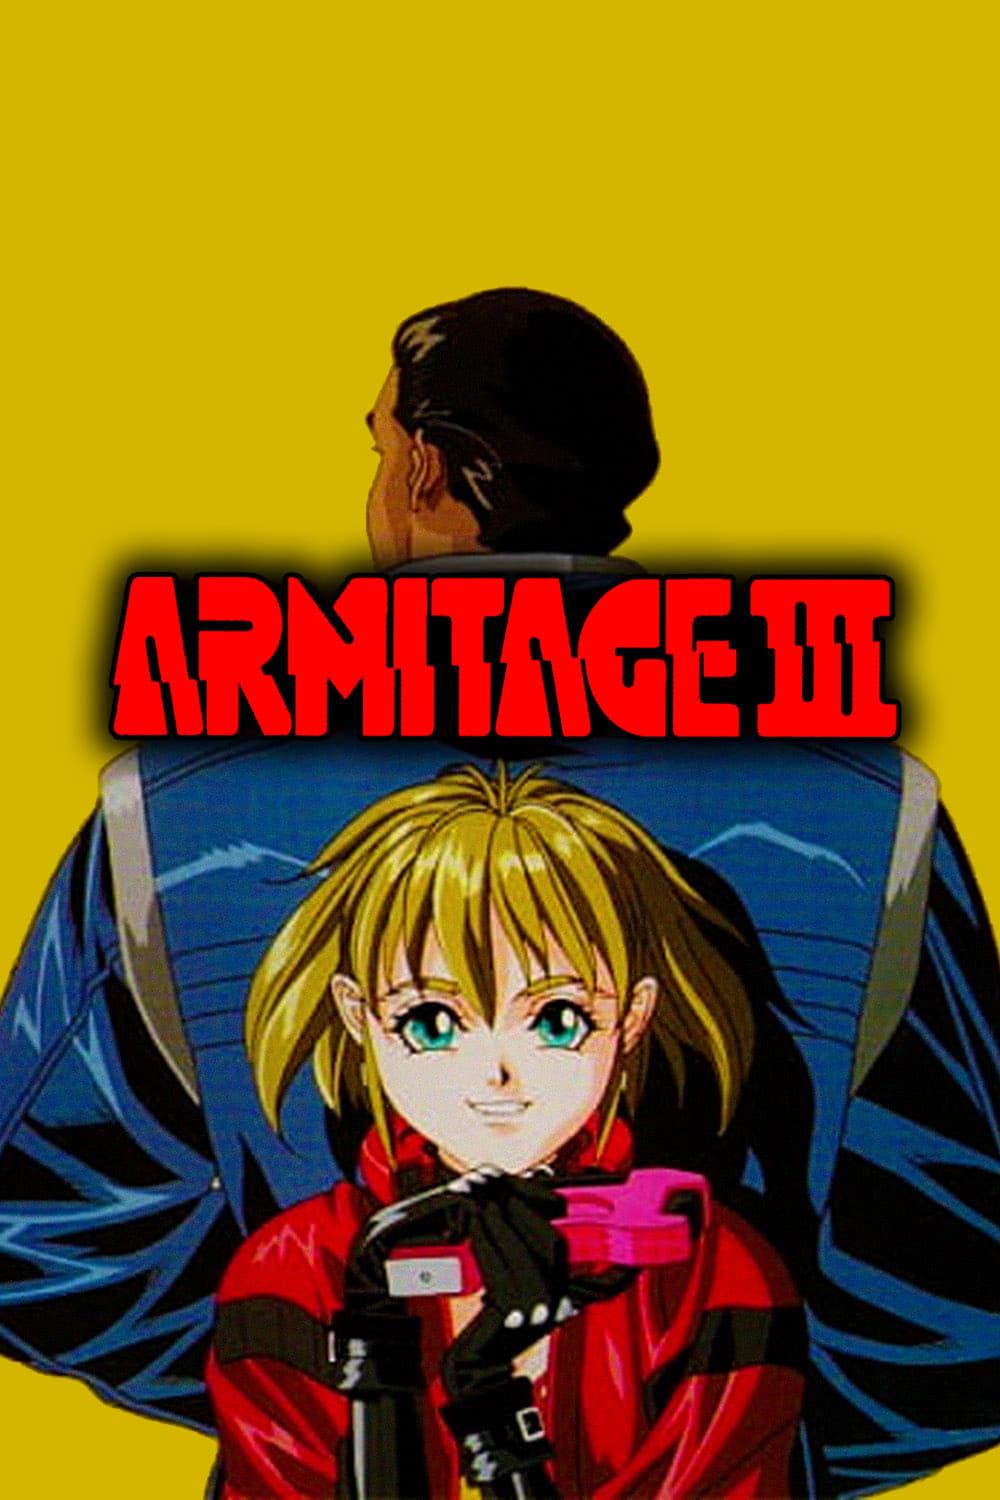 Armitage III poster